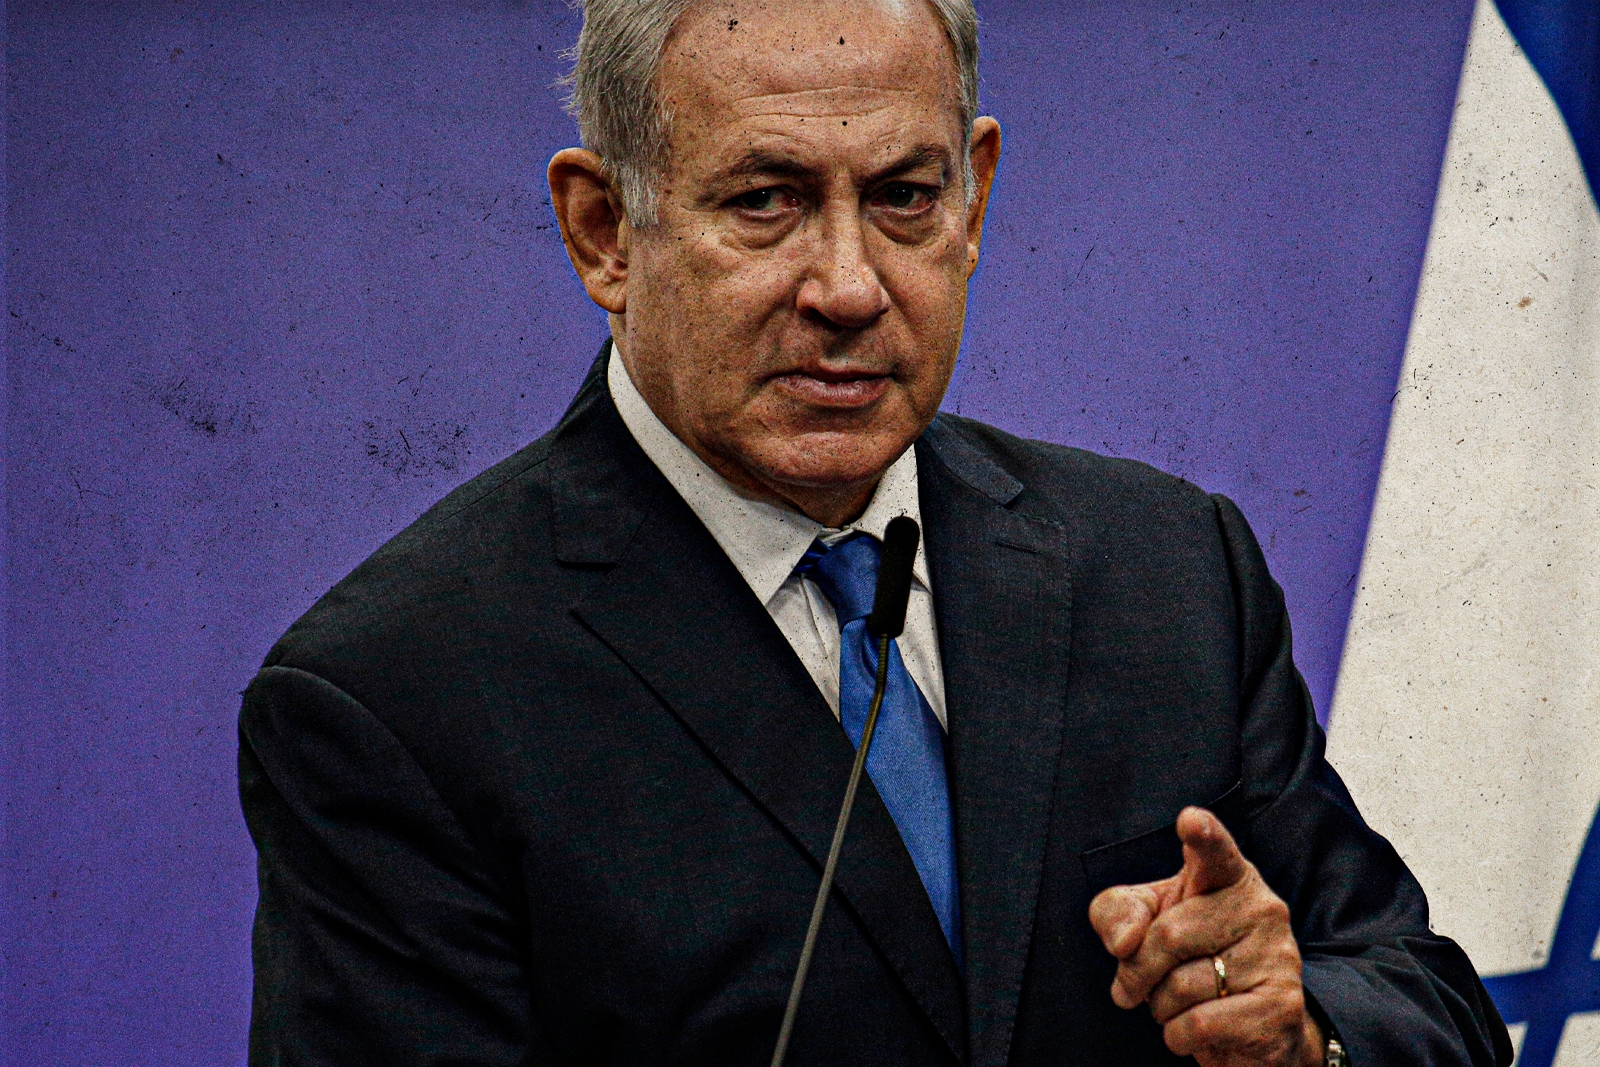 Former Israeli Prime Minister Benjamin Netanyahu